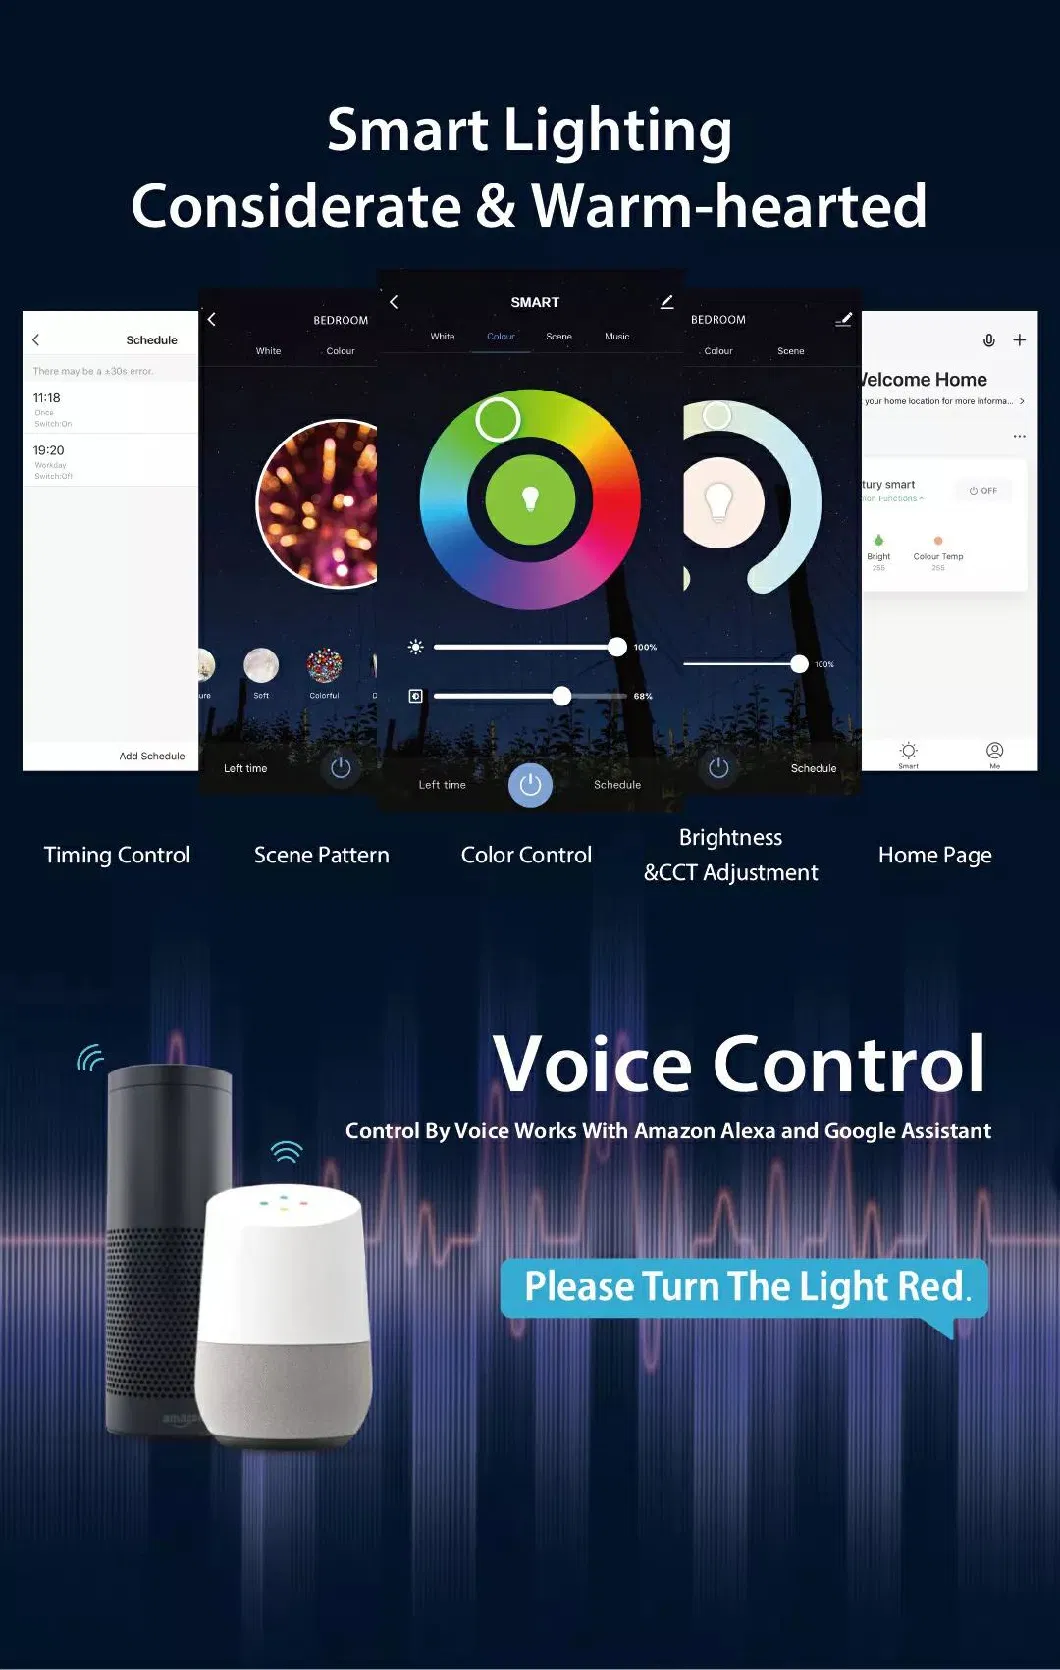 Wireless Control RGB Color Changing Floodlight Smart WiFi LED Flood Light